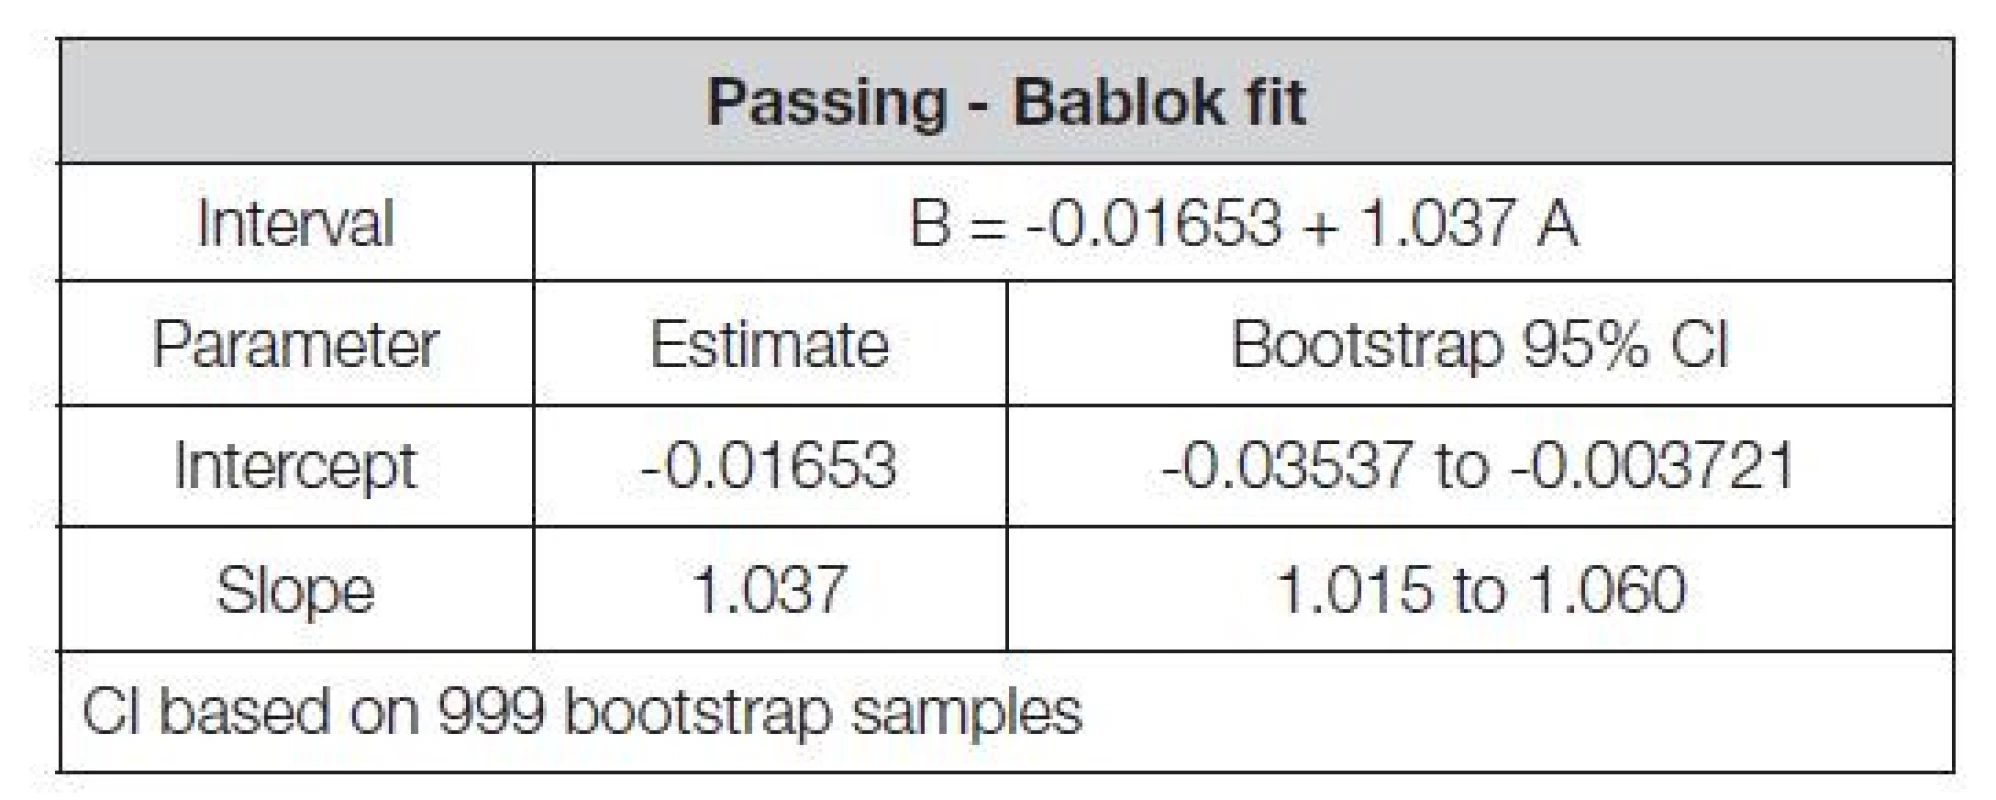 Passing-Bablok fit summary